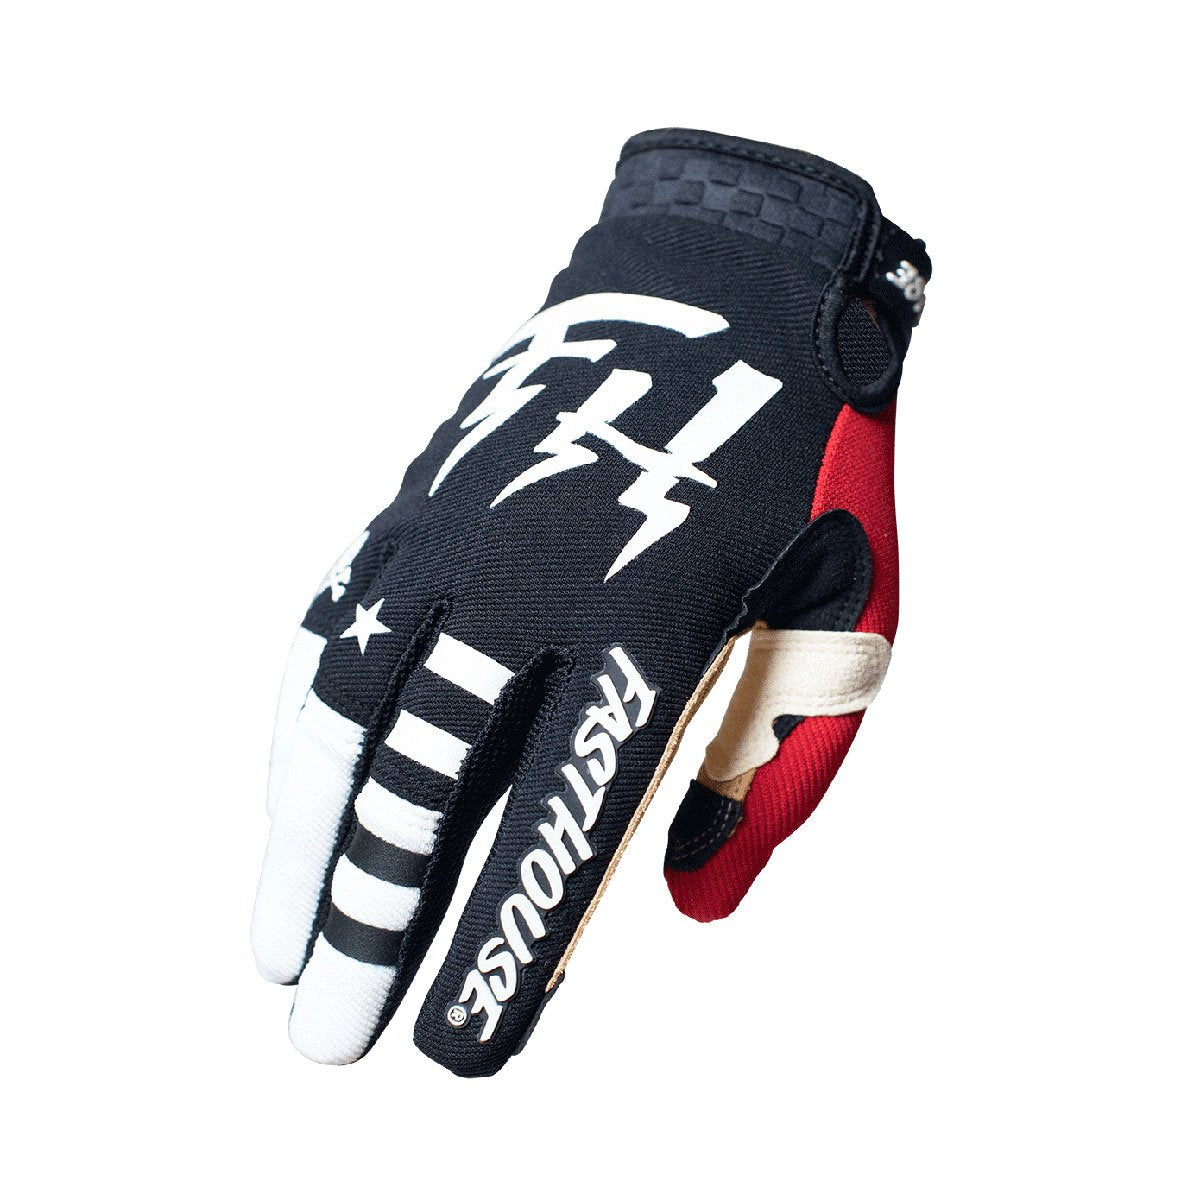 Fasthouse - Speed Style Bereman Youth Glove - Black/Cream